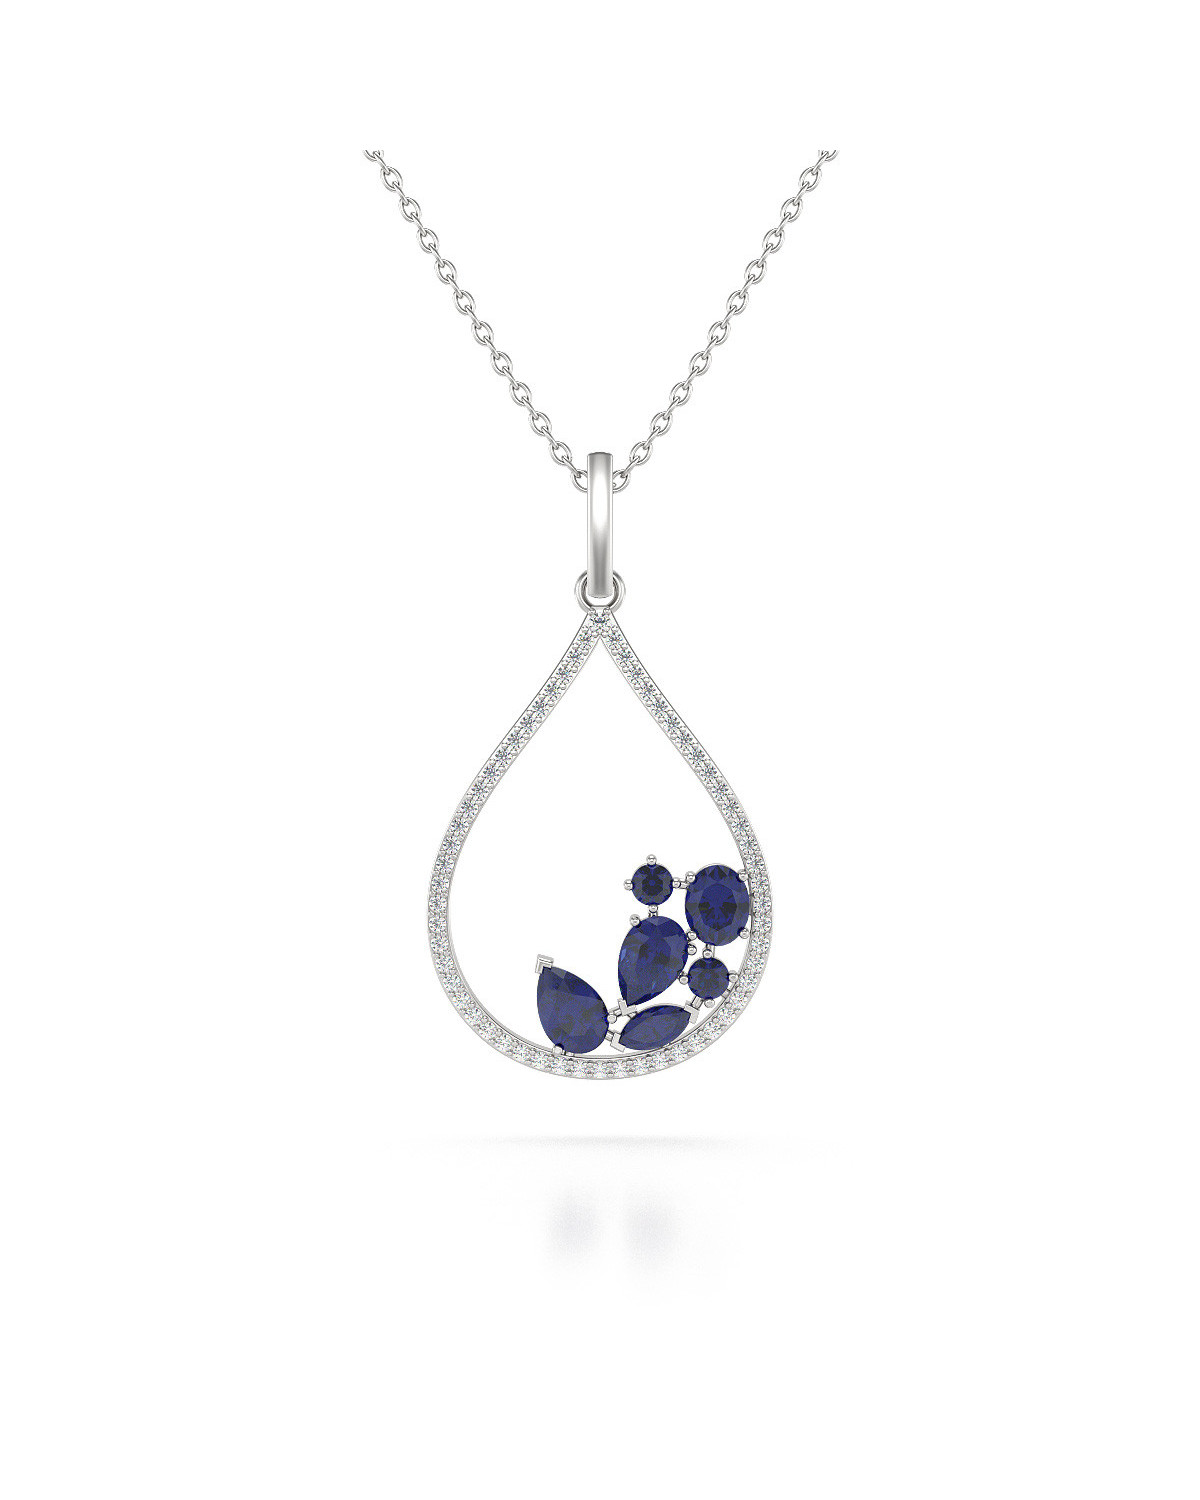 925 Silver Sapphire Diamonds Necklace Pendant Chain included